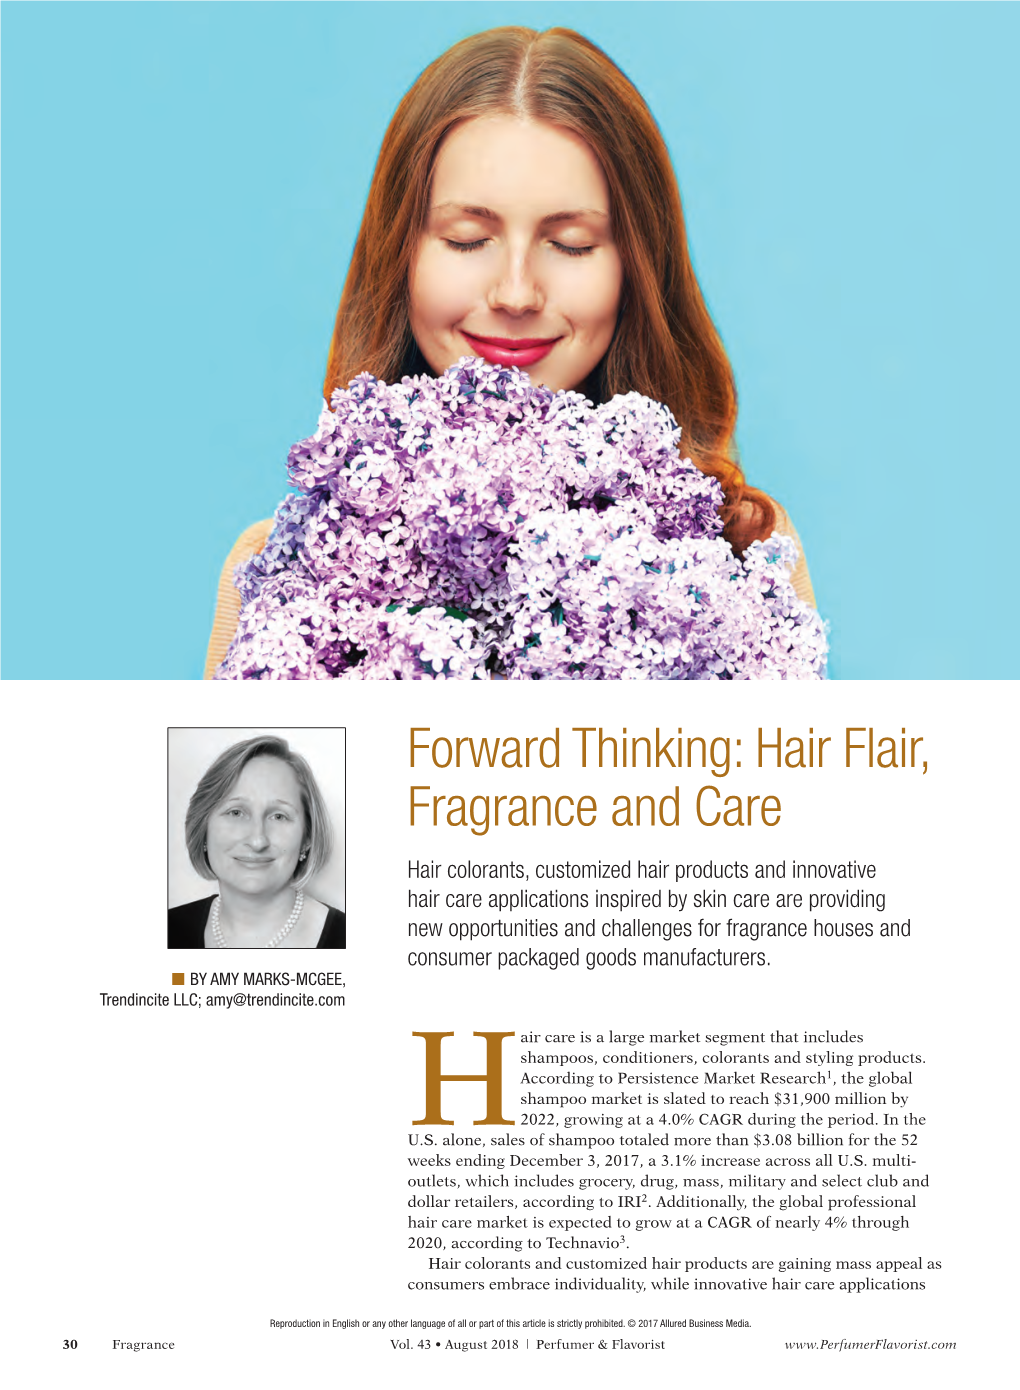 Forward Thinking: Hair Flair, Fragrance and Care